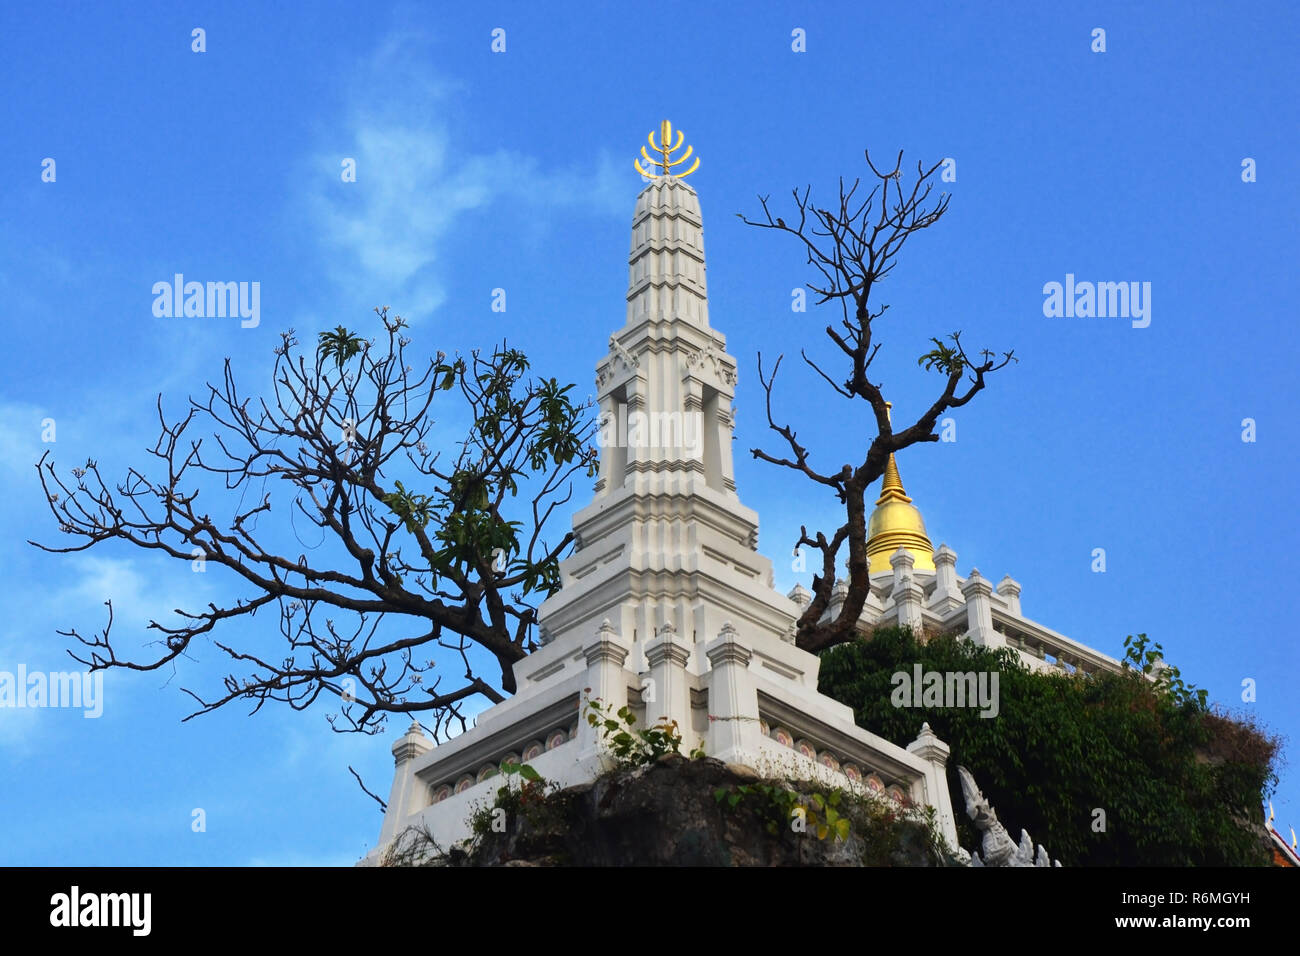 La Pagode blanche à Khao Mo situé dans Wat Prayurawongsawas Warawihan temple, Thonburi, Bangkok, Thaïlande. Banque D'Images